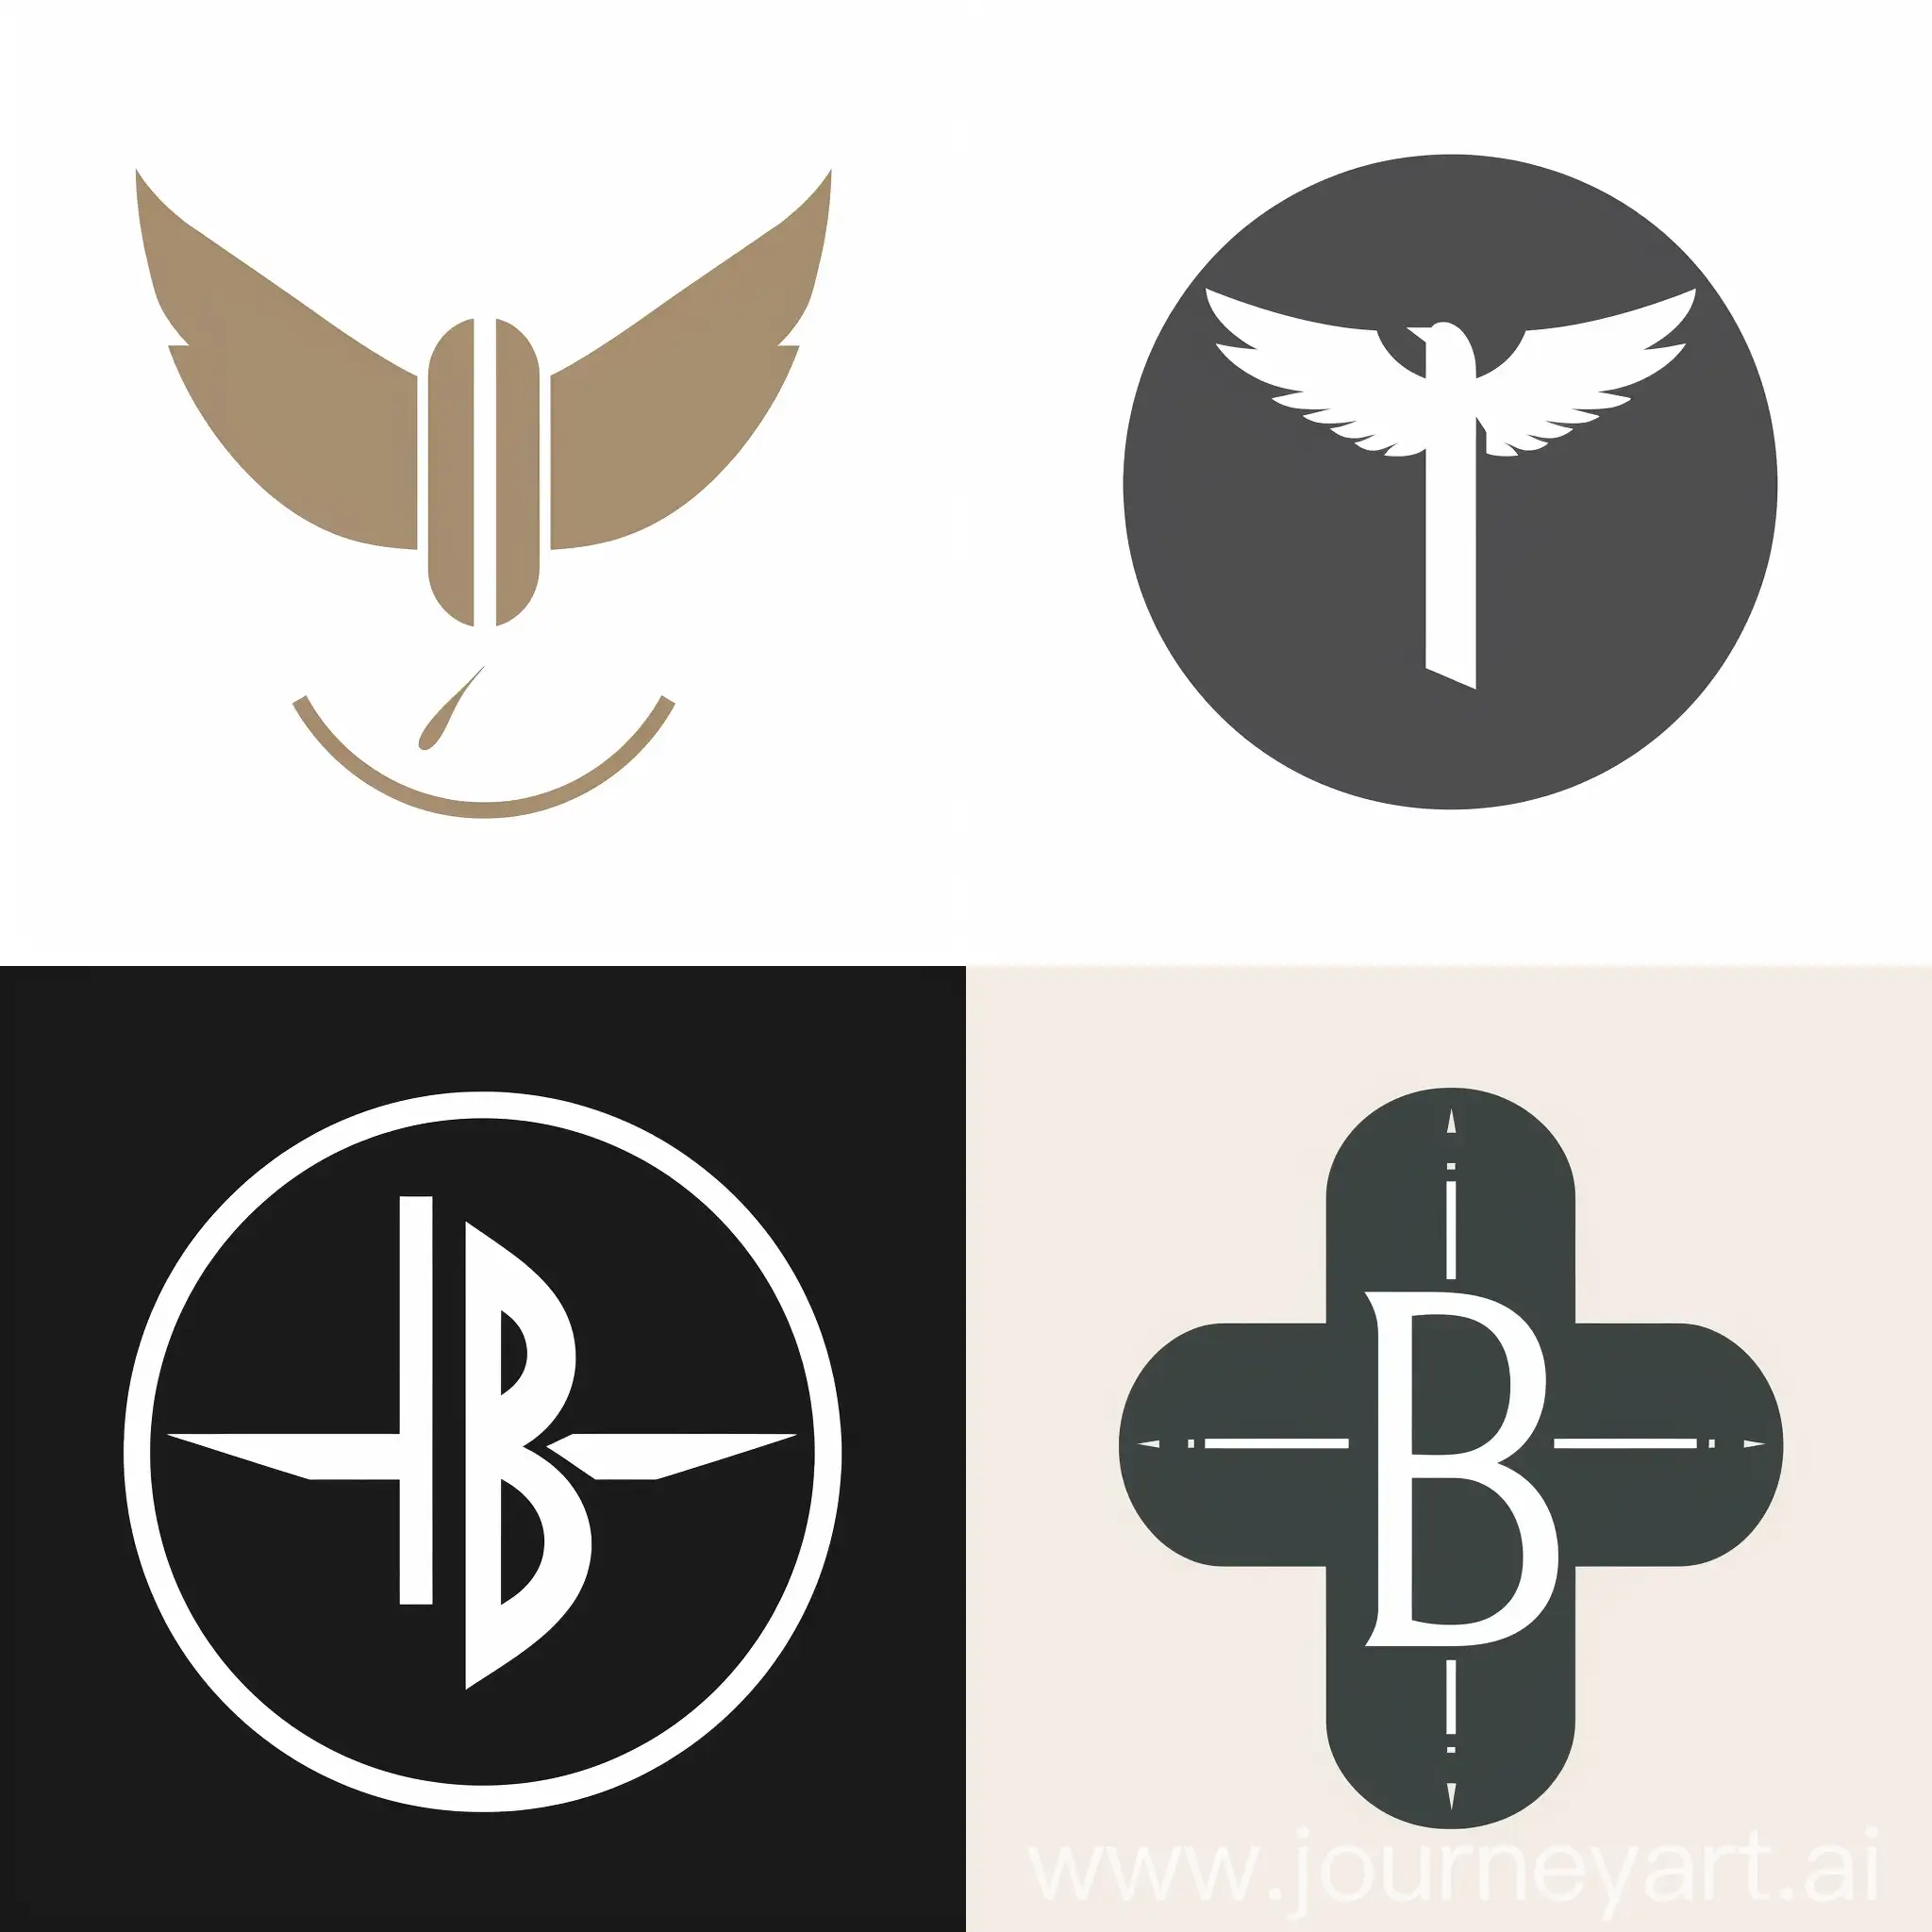 Minimalist-Christian-Logo-Stylized-B-with-Dove-and-Cross